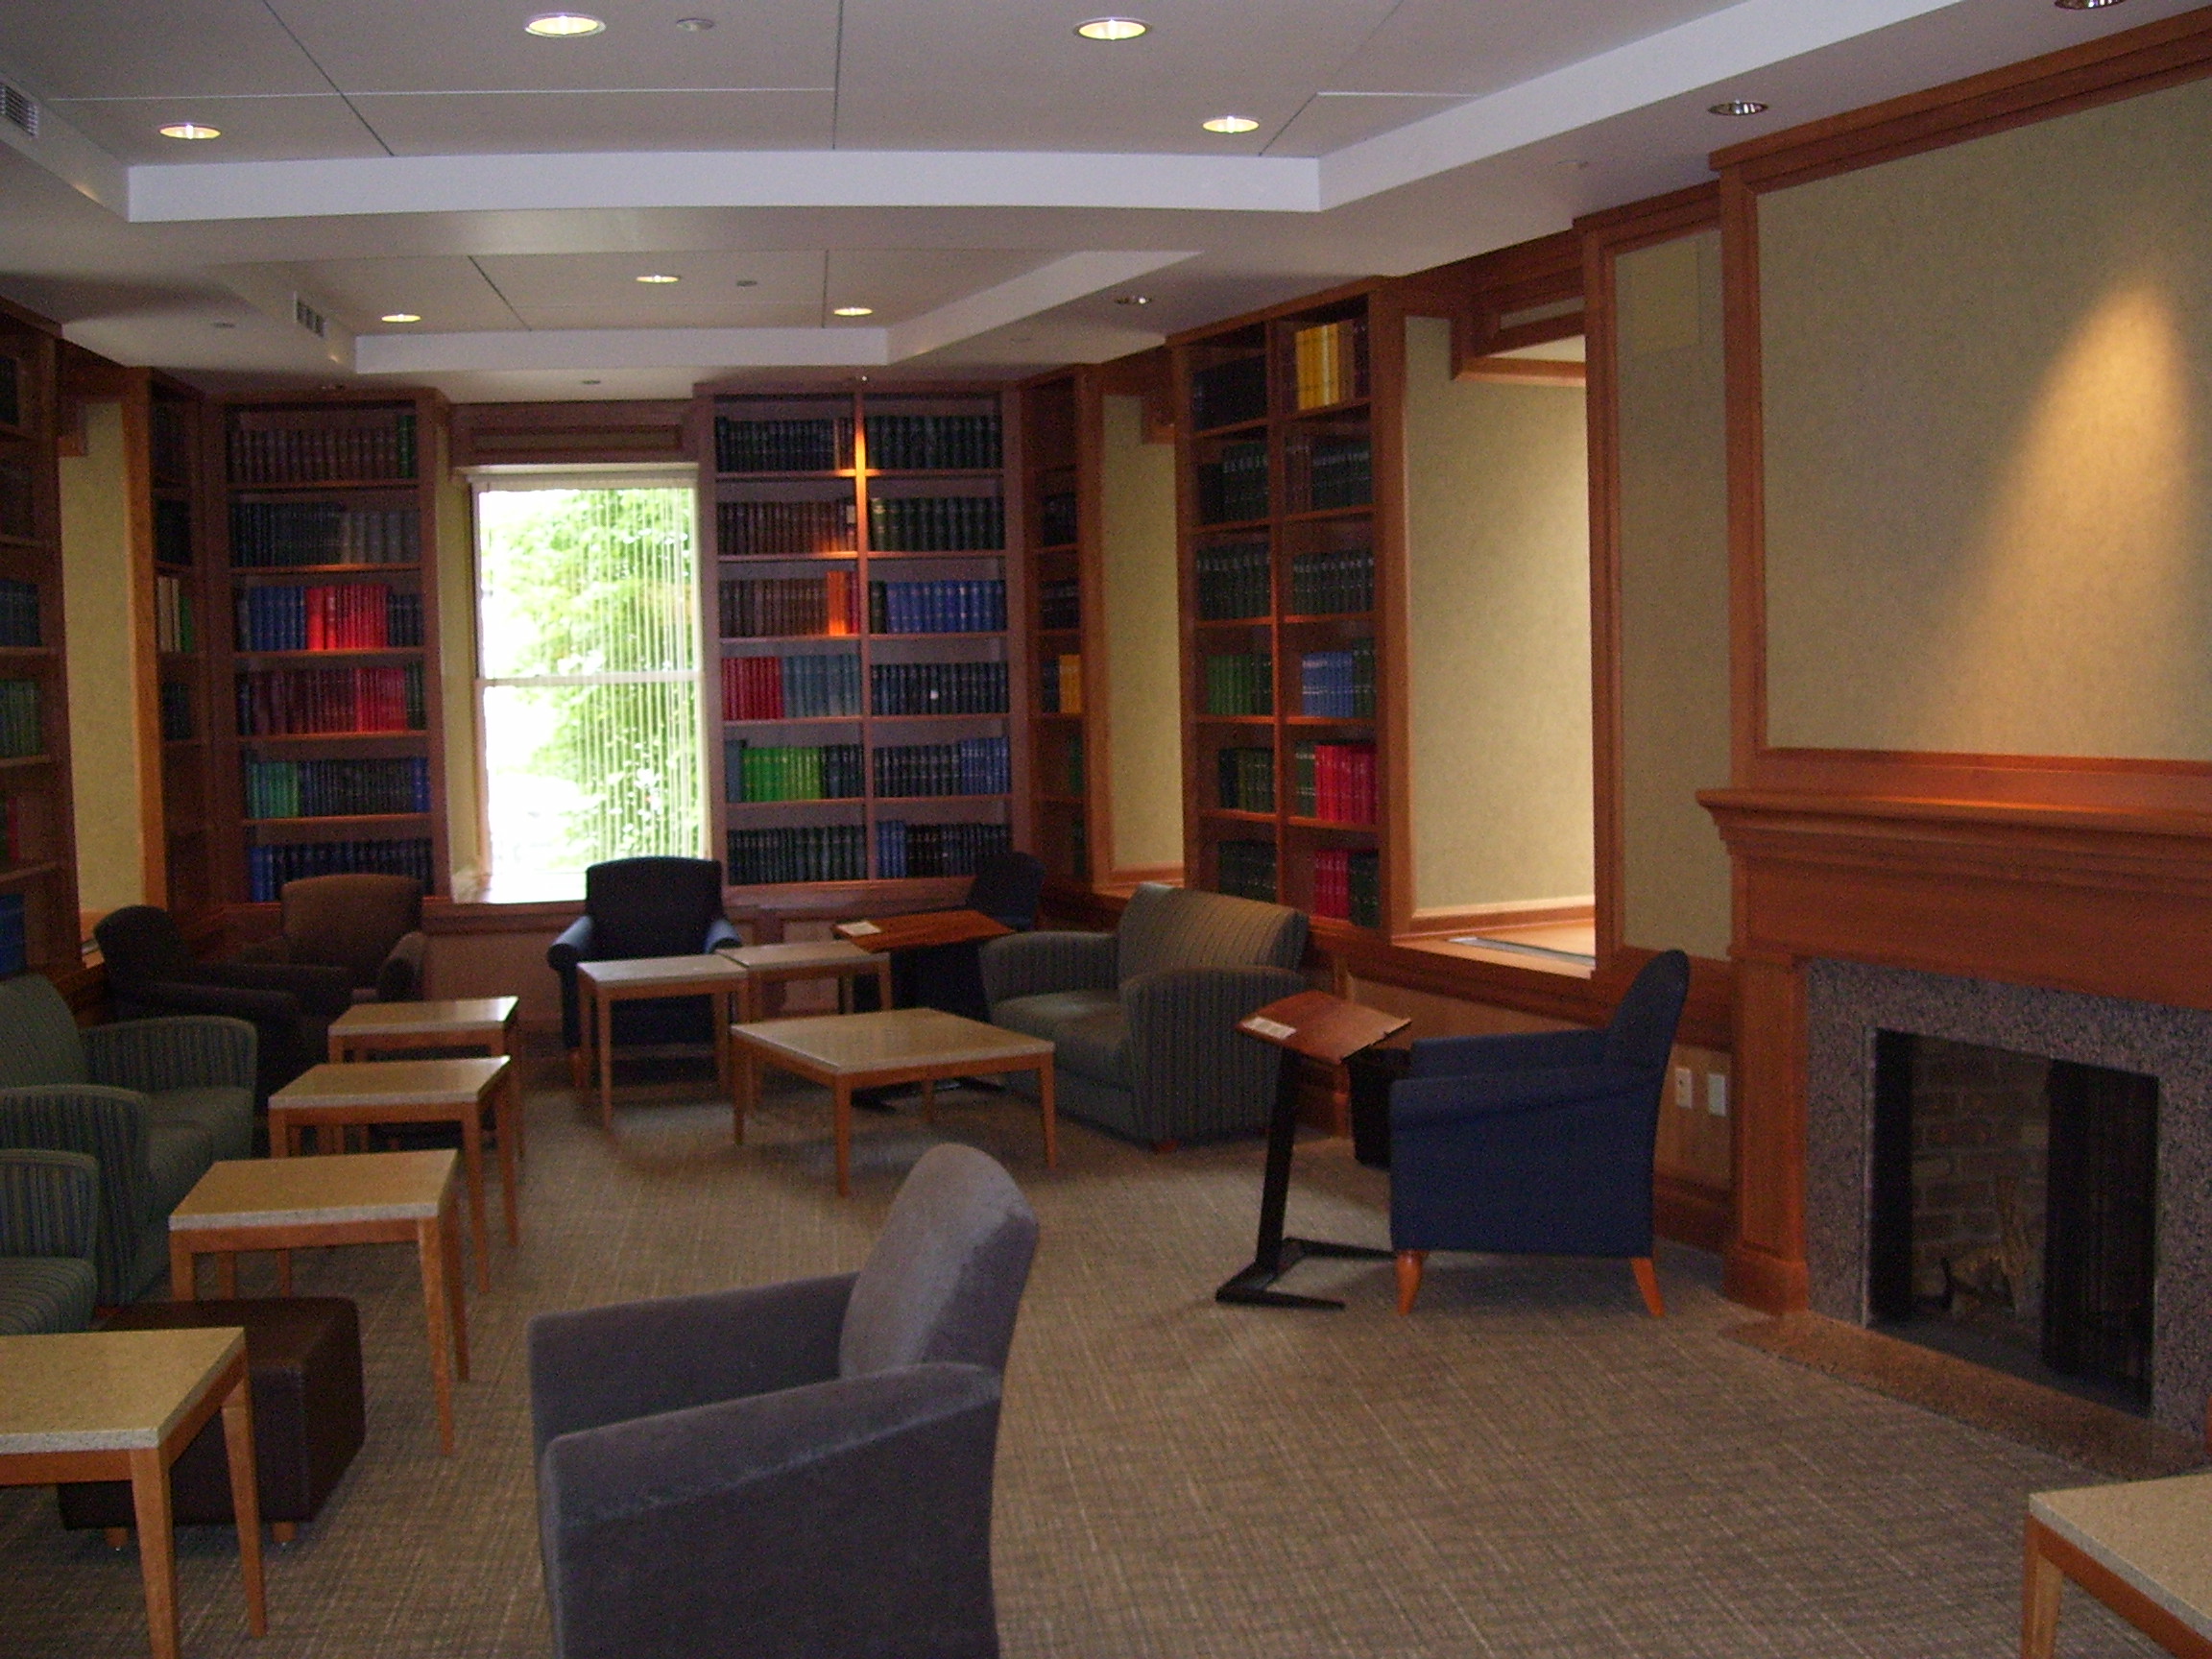 Suffolk University Sawyer Library